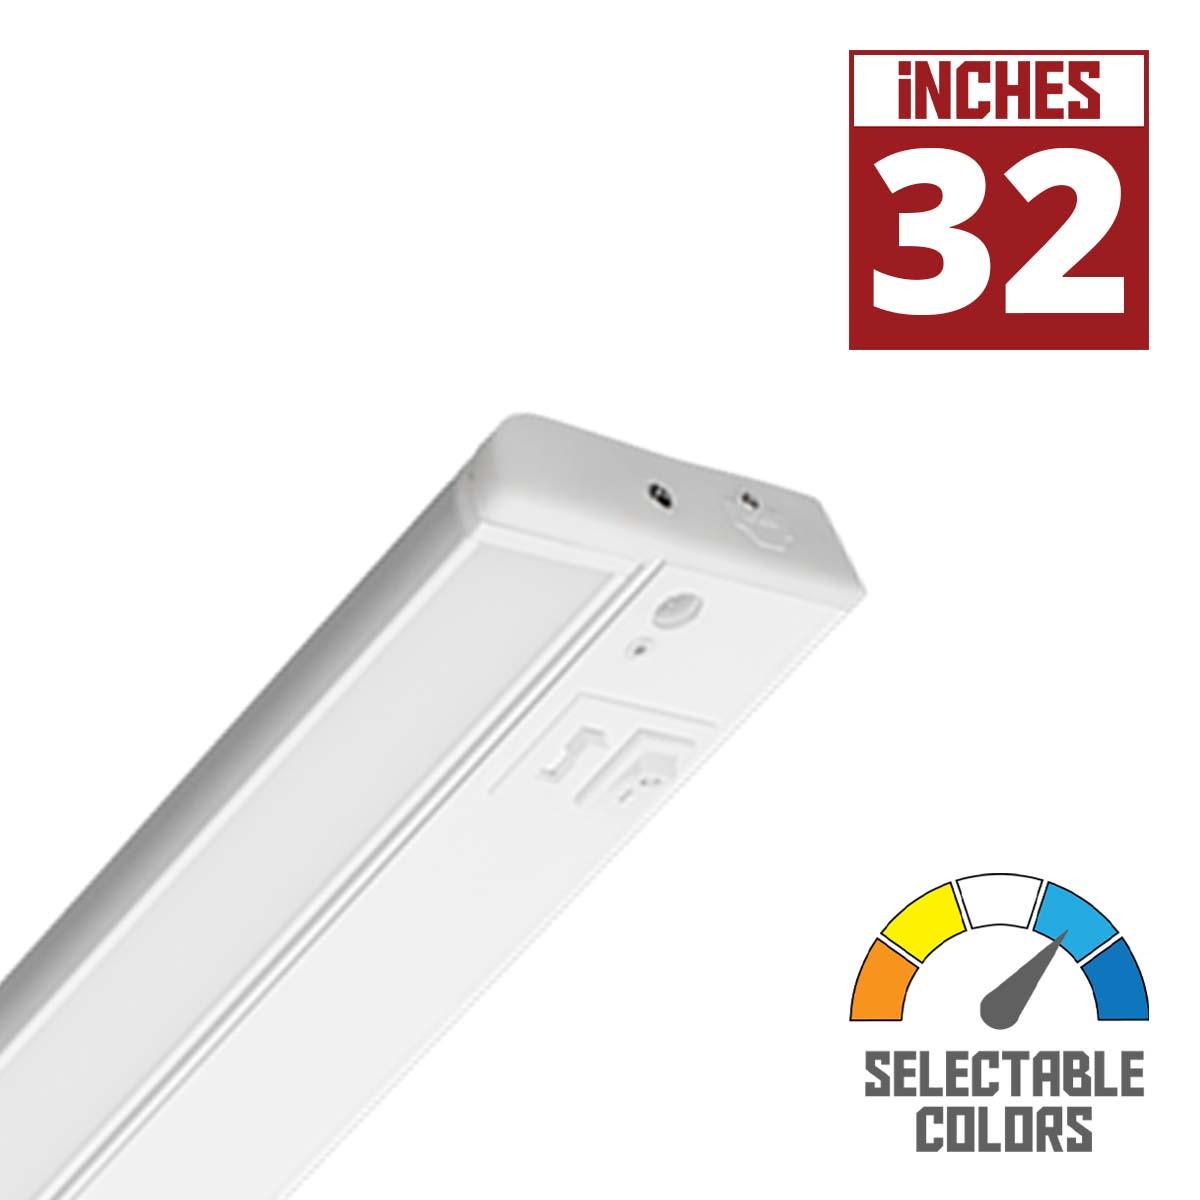 LED 5 Complete 32 Inch Swivel Under Cabinet LED Light, 1050 Lumens, Linkable, Selectable CCT 2700K to 5000K, 120V